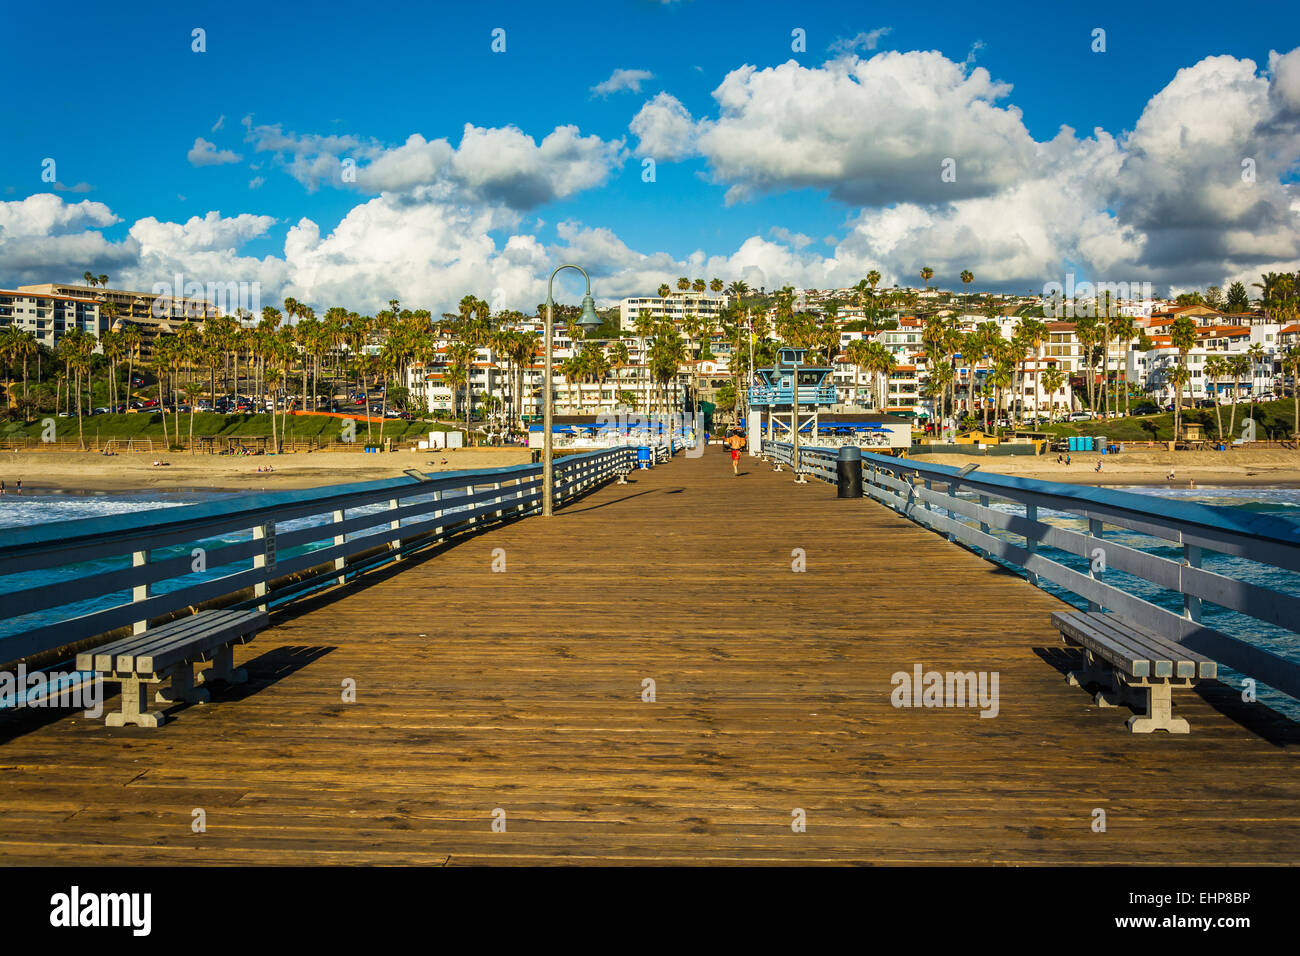 The fishing pier in San Clemente, California. Stock Photo